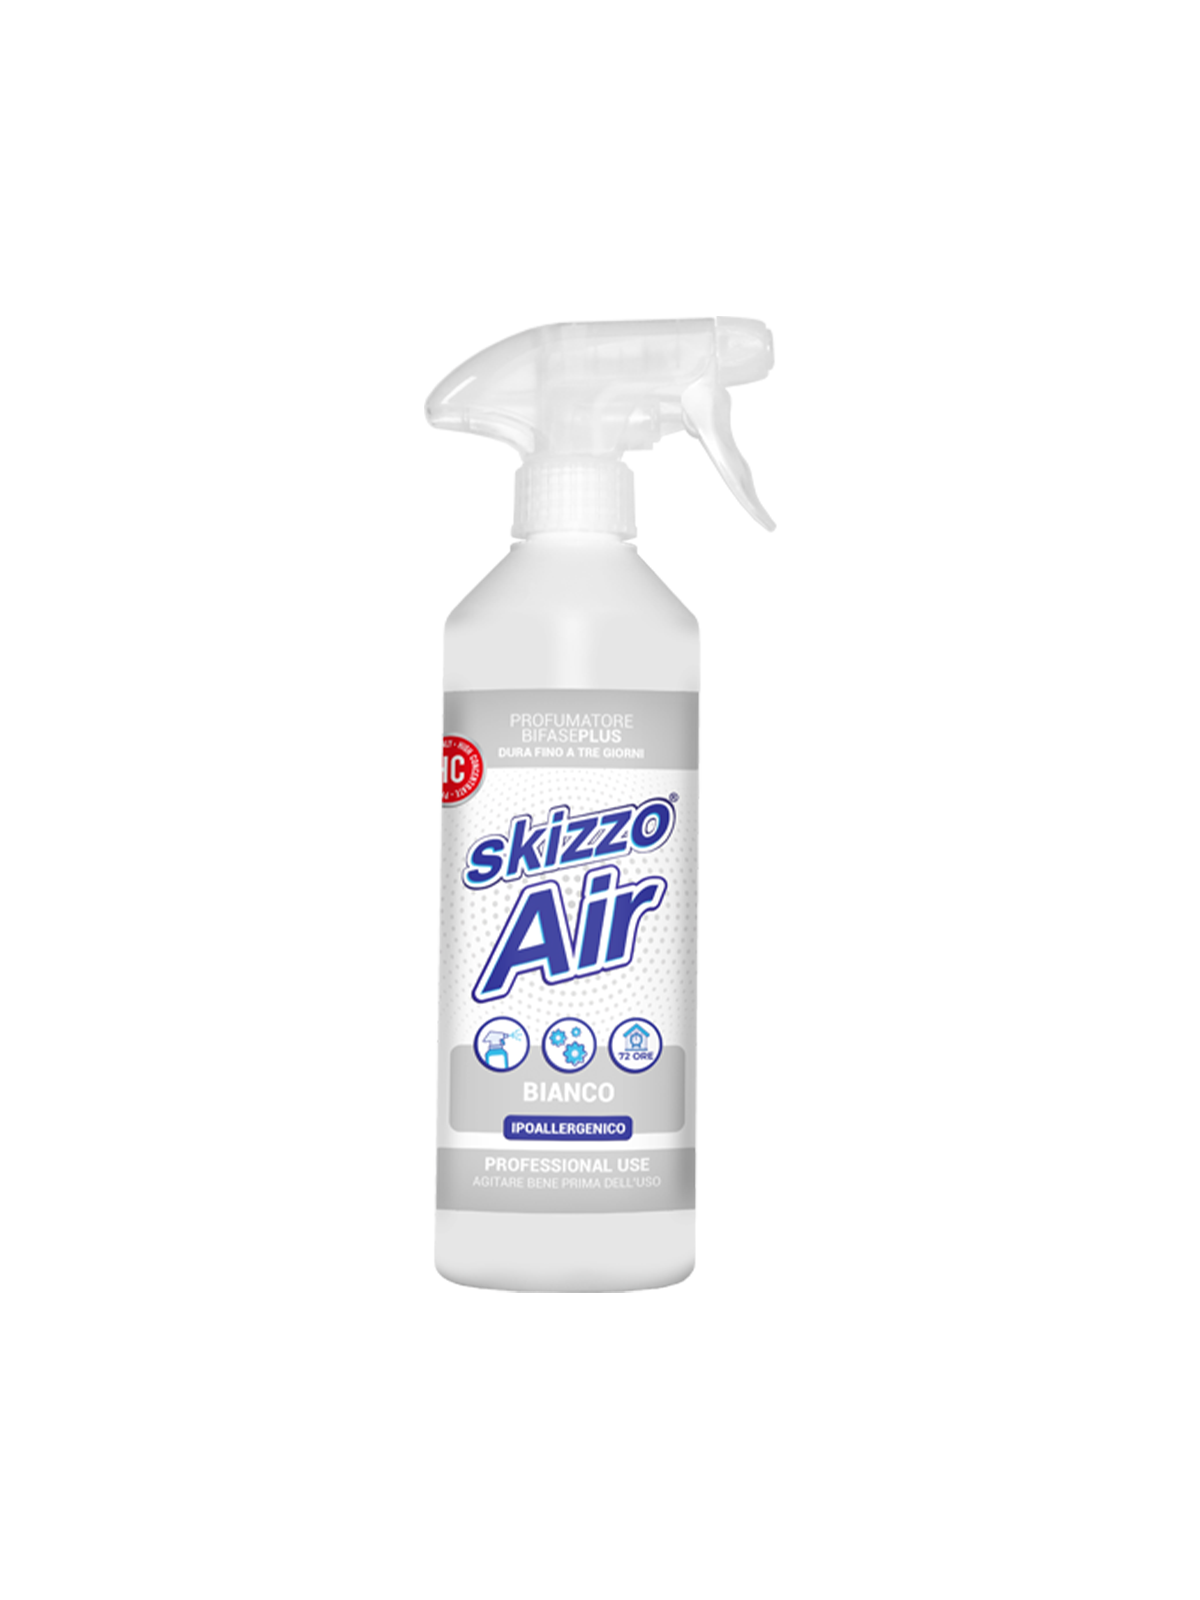 Skizzo Air 600ml - profumatore professionale